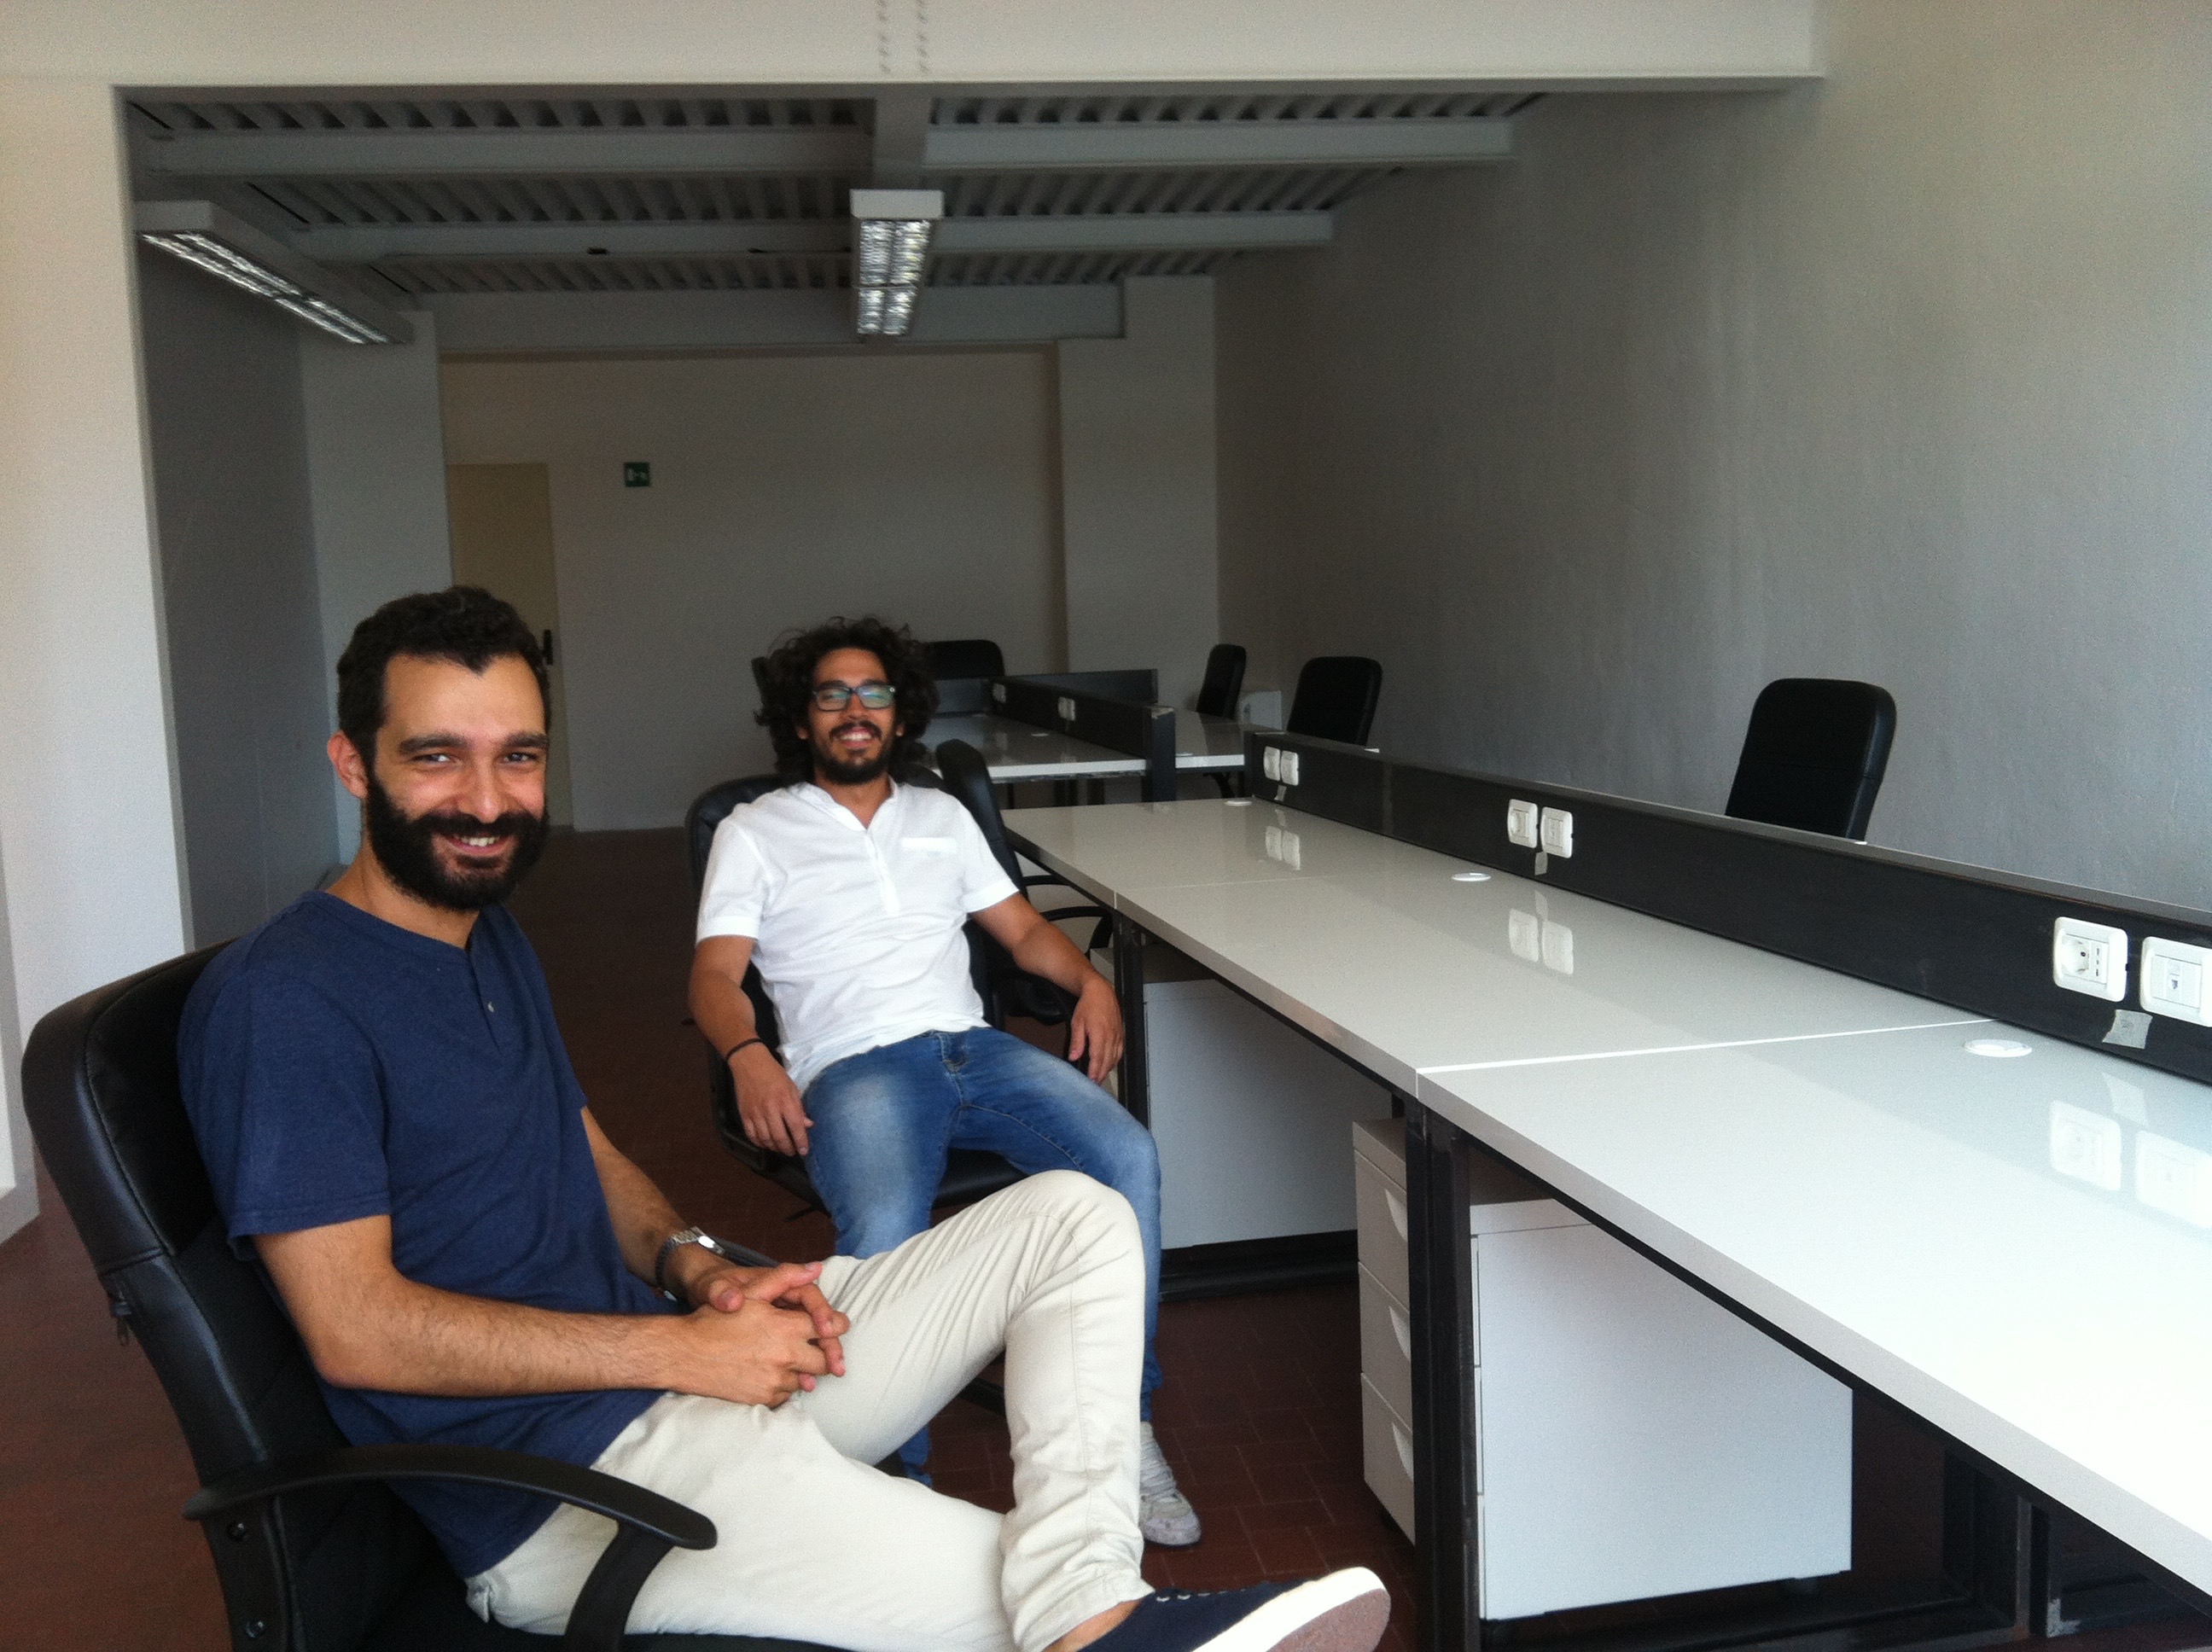 Nicola Siza and Marco Pischedda, Hub / Spoke desks